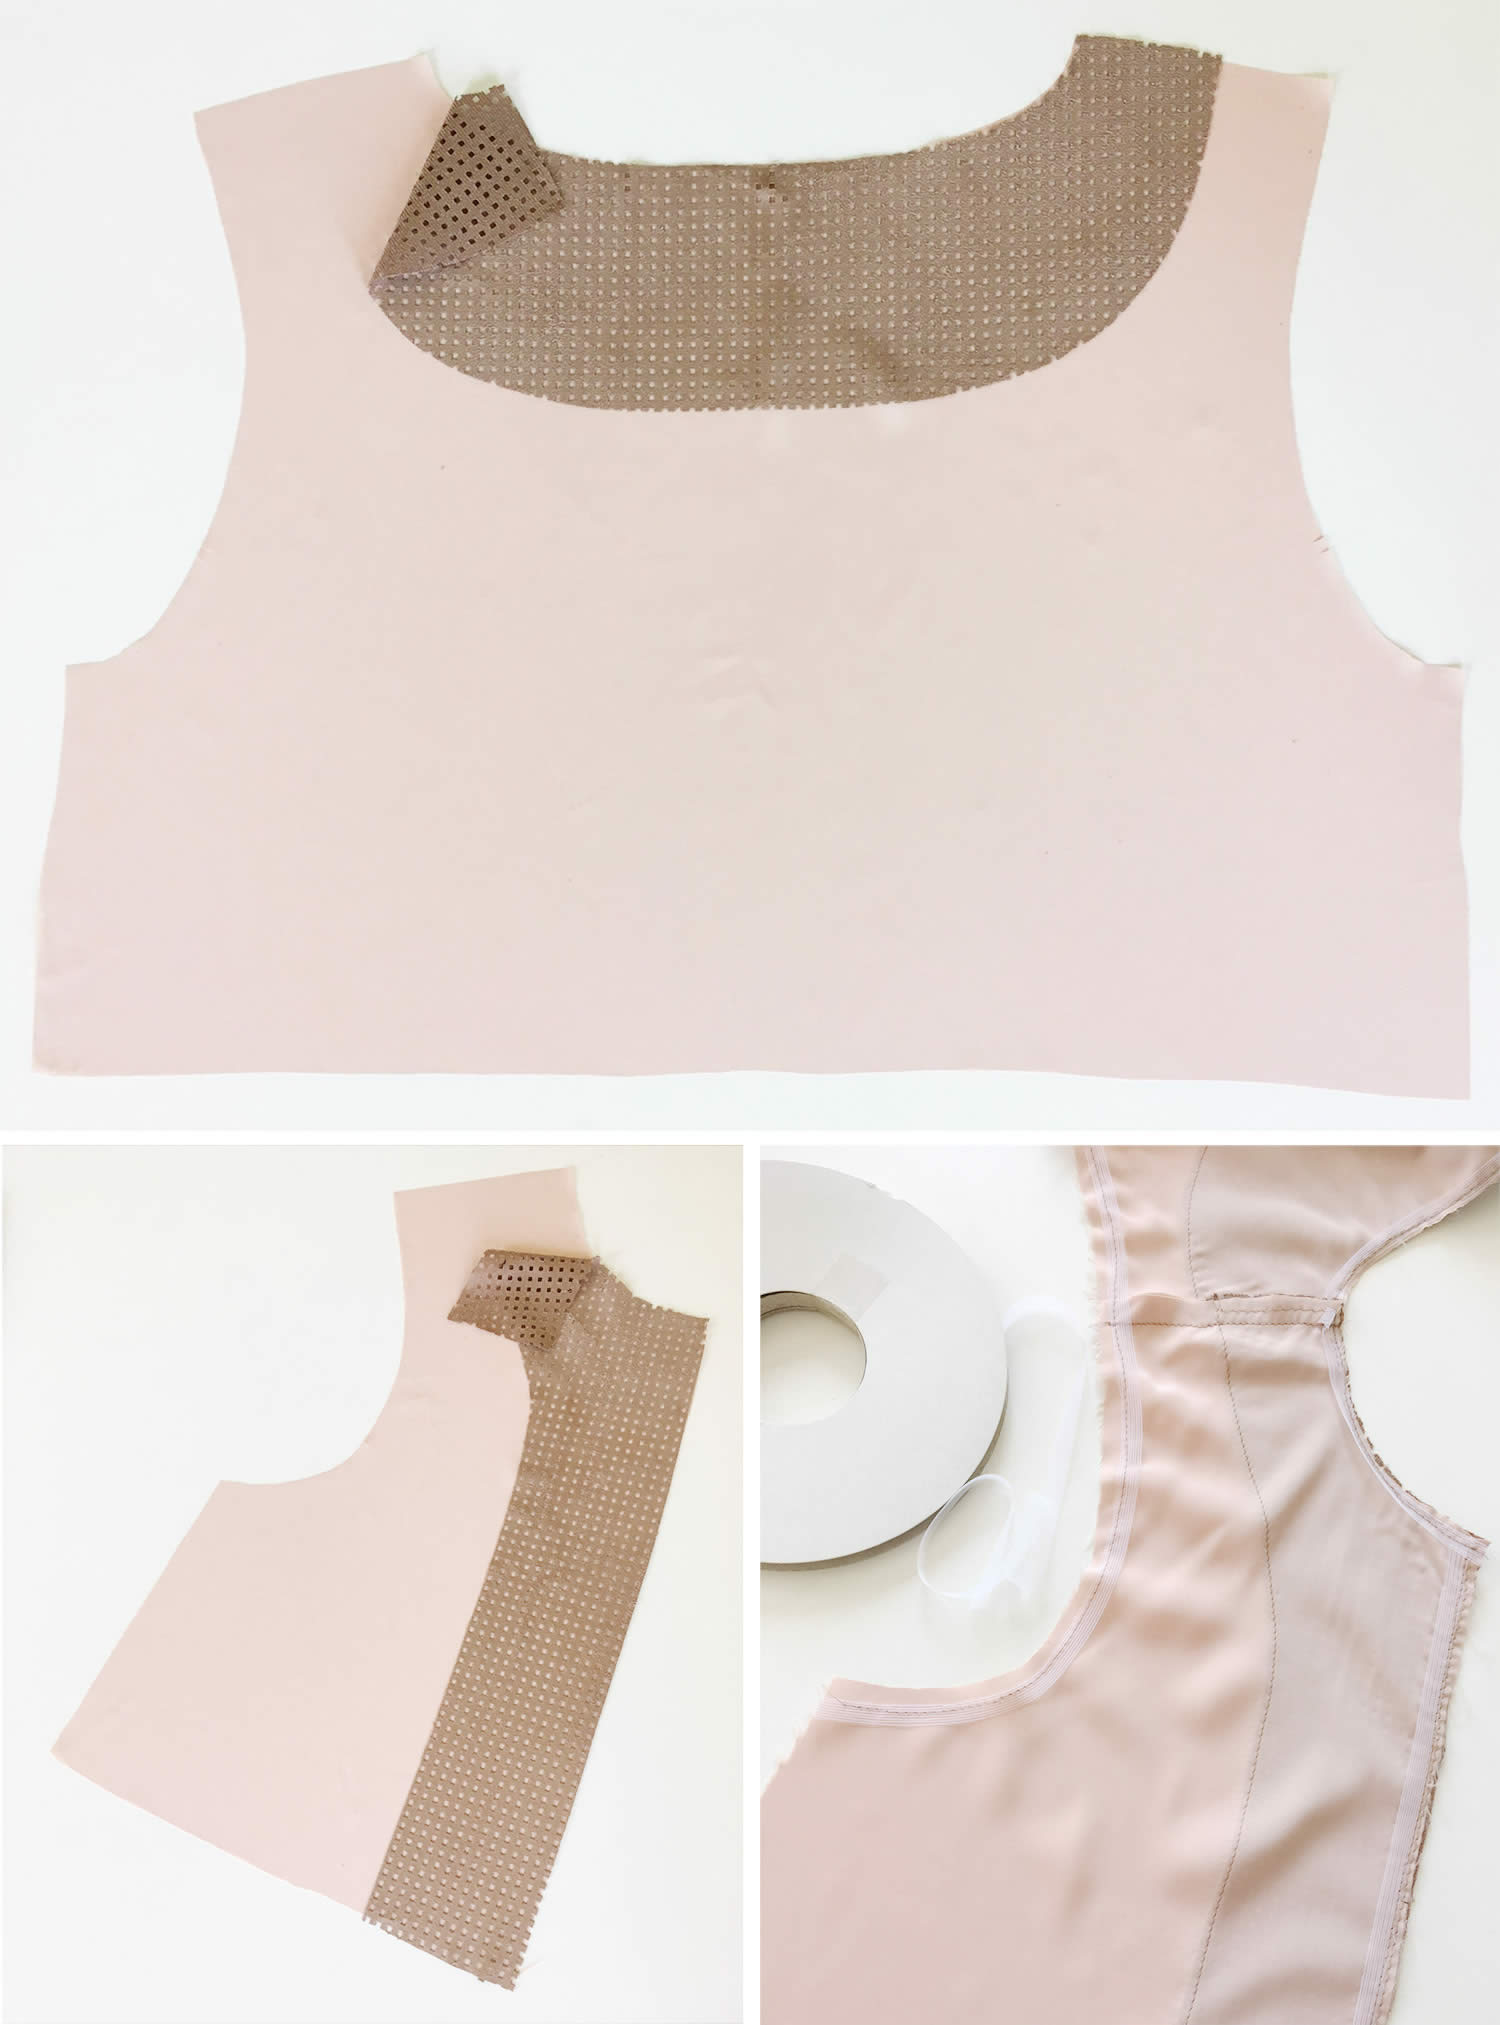 Ladulsatina Sewing Blog - Aestiva sleeveless short vest by Wearologie in laser-cut alcantara and silk - work in progress details